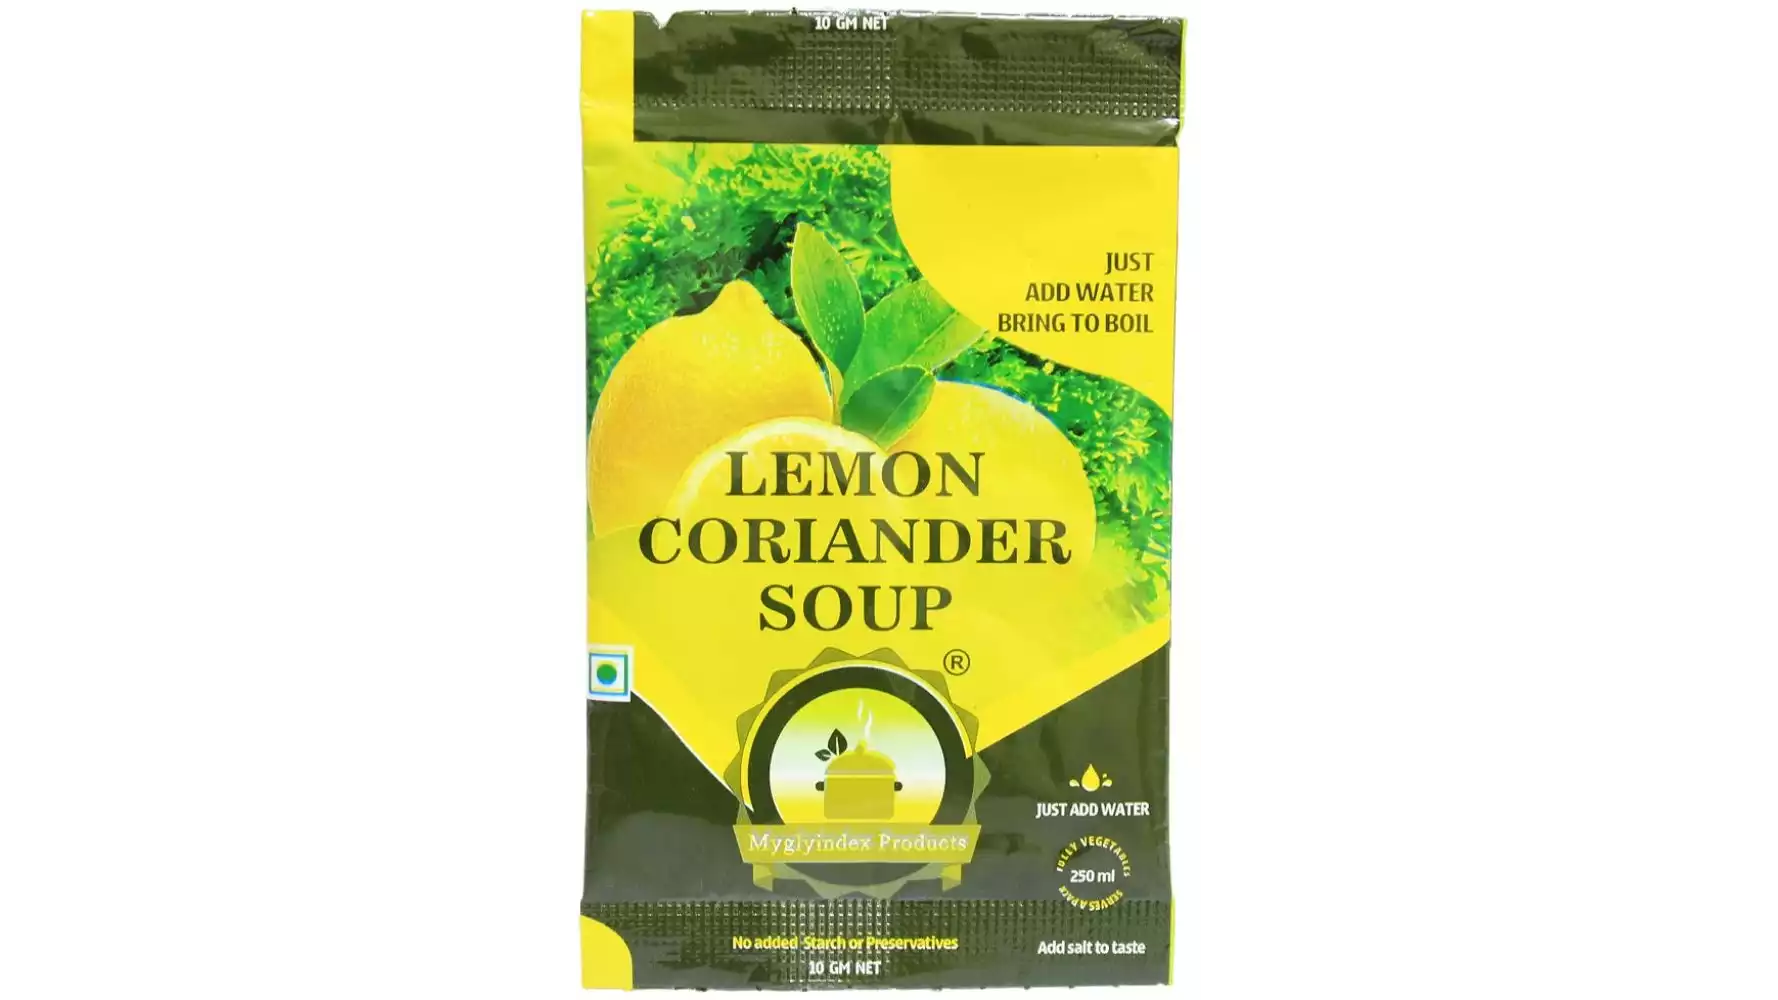 Myglyindex Products Lemon coriander Soup (30Sachet)